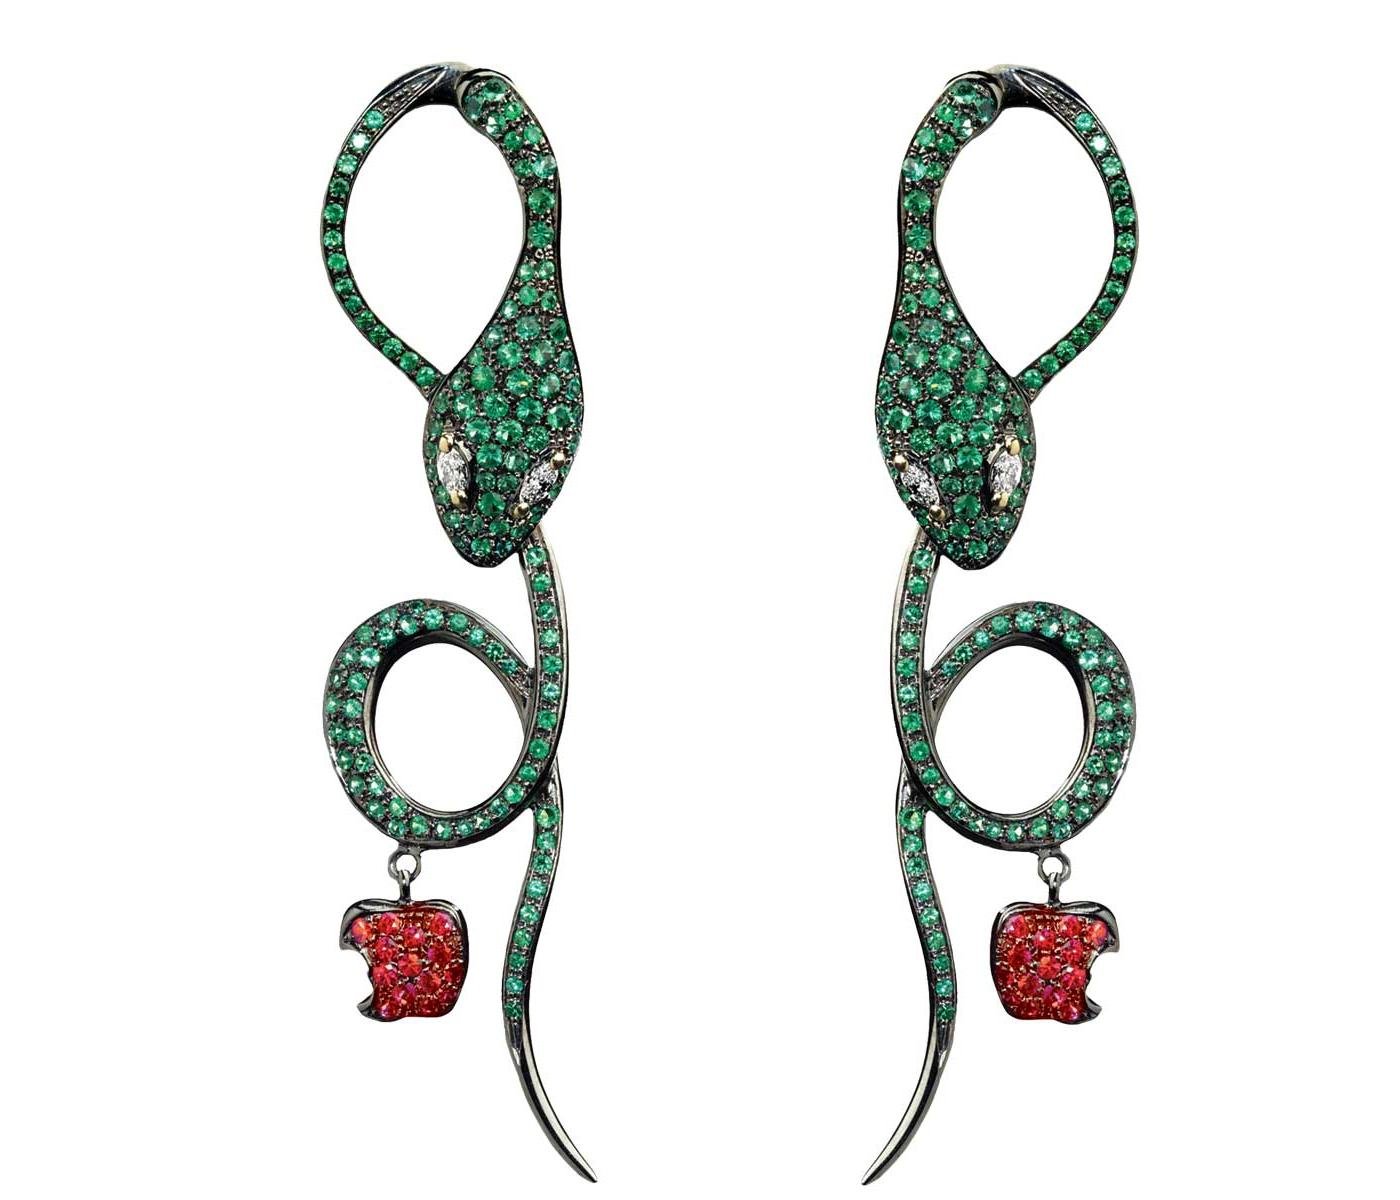 Earrings by Dada Arrigoni